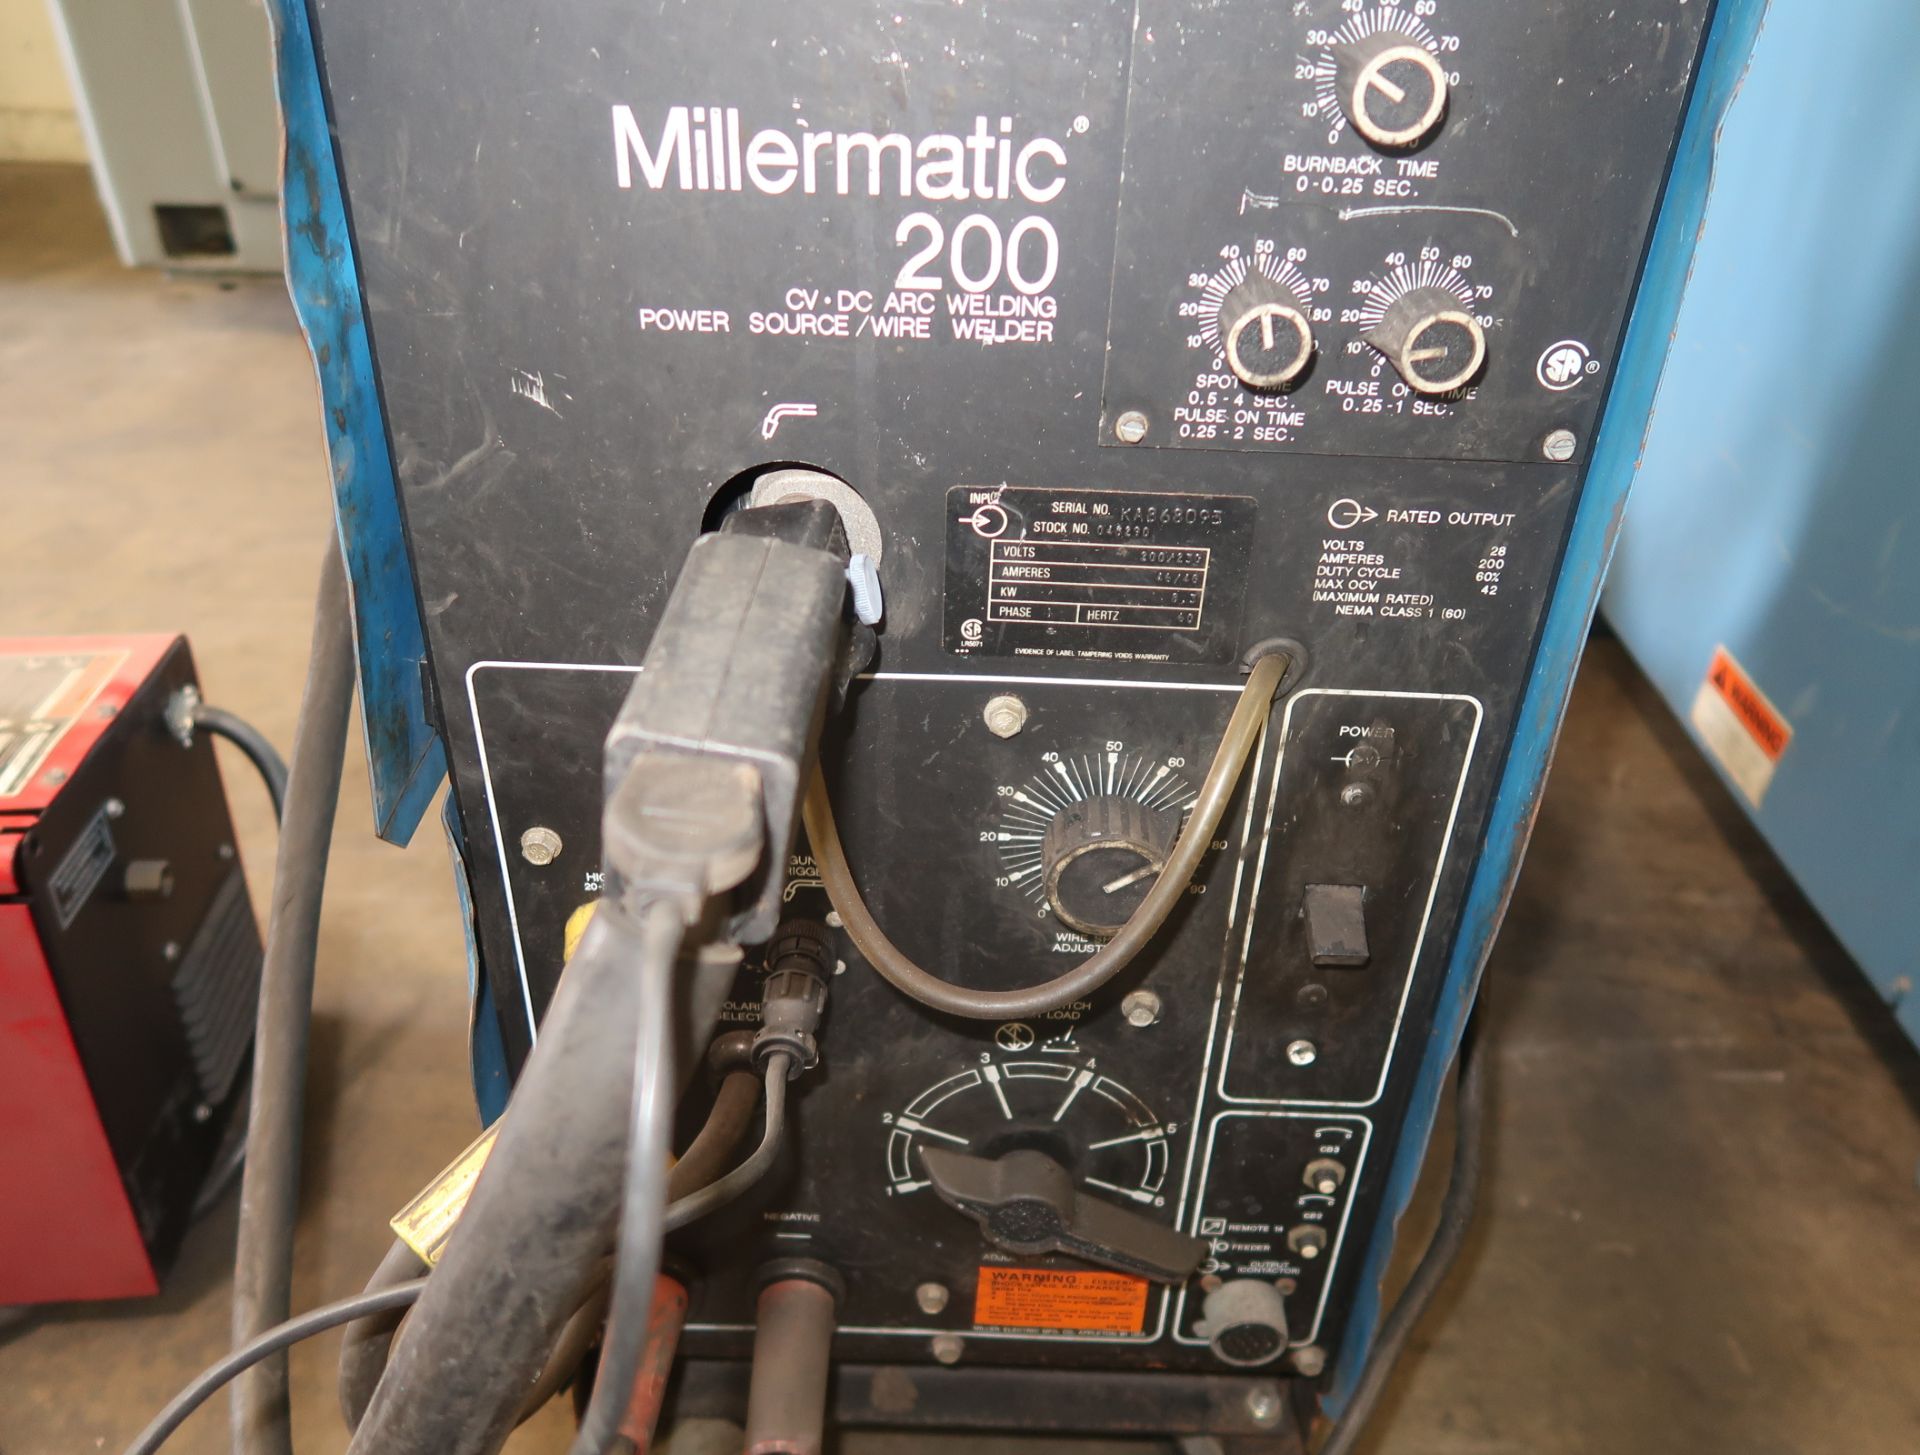 MILLER MILLERMATIC200 CV-DC MIG WELDING POWER SOURCE/WIRE FEEDER - Image 2 of 3